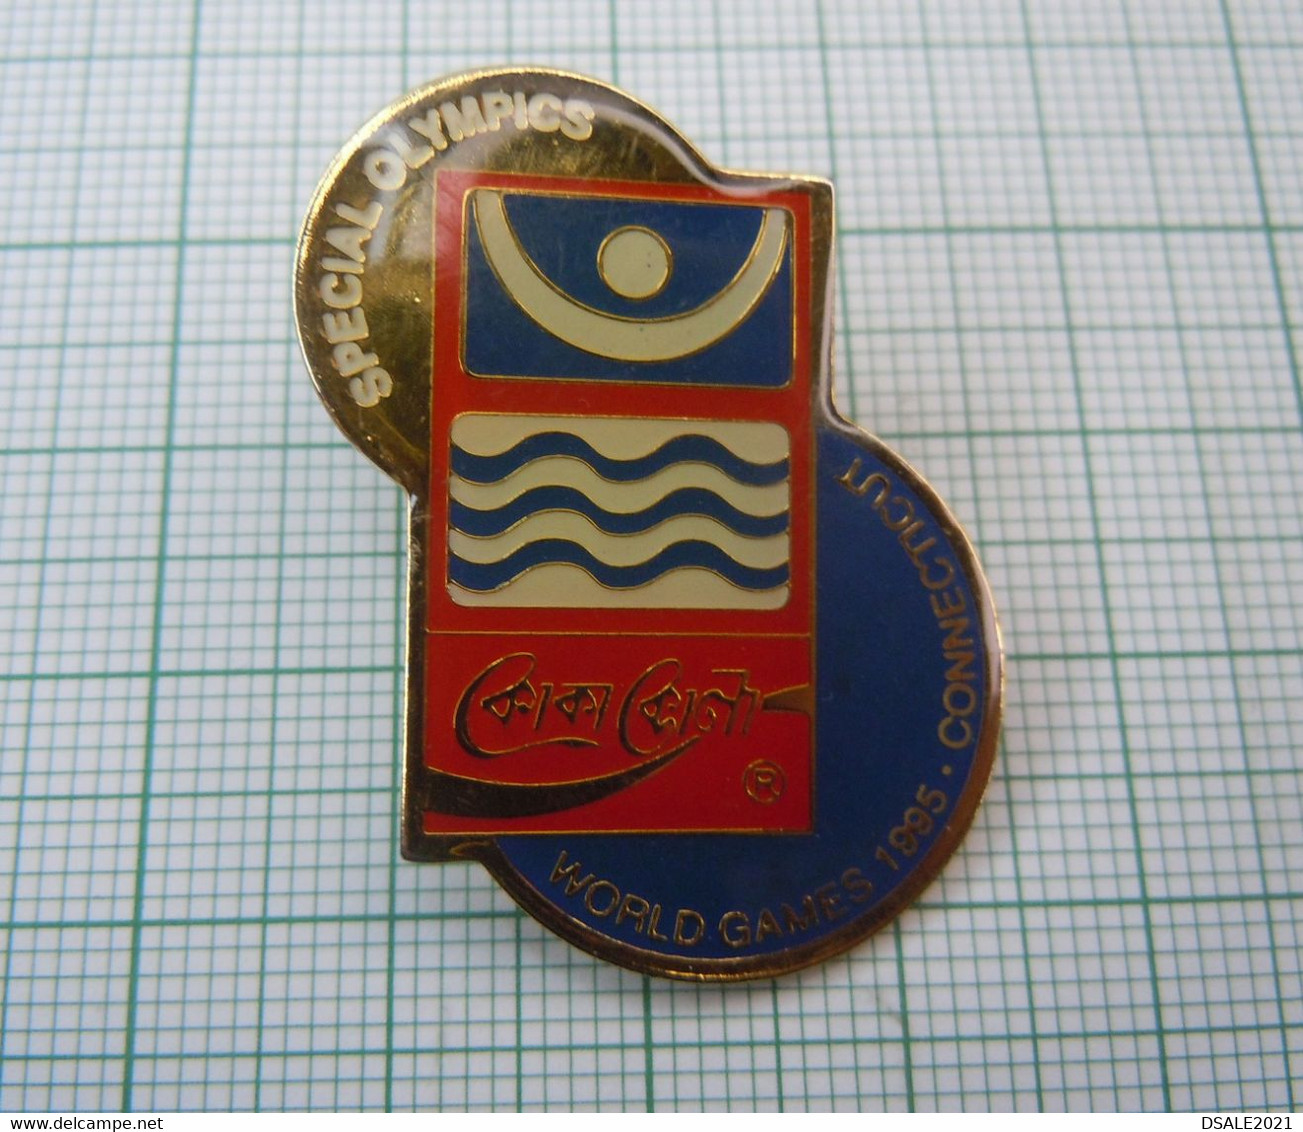 Special Olympics 1995 World Games Swim Swimming Bangladesh COCA-COLA, Coca-Cola Sponsor Lapel Pin Badge (ds786) - Natation